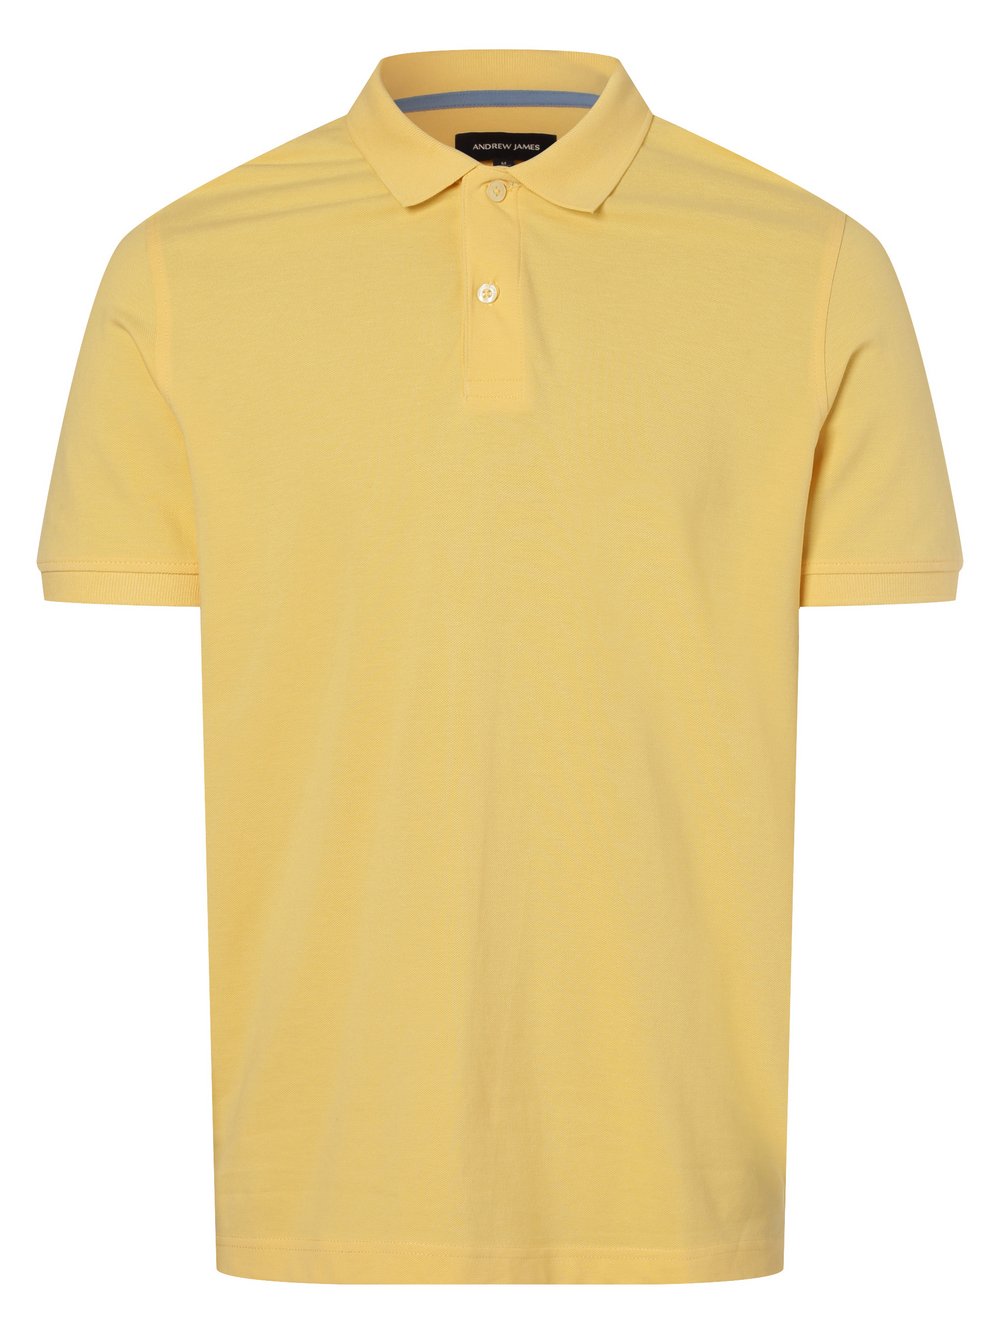 Andrew James - Męska koszulka polo, żółty